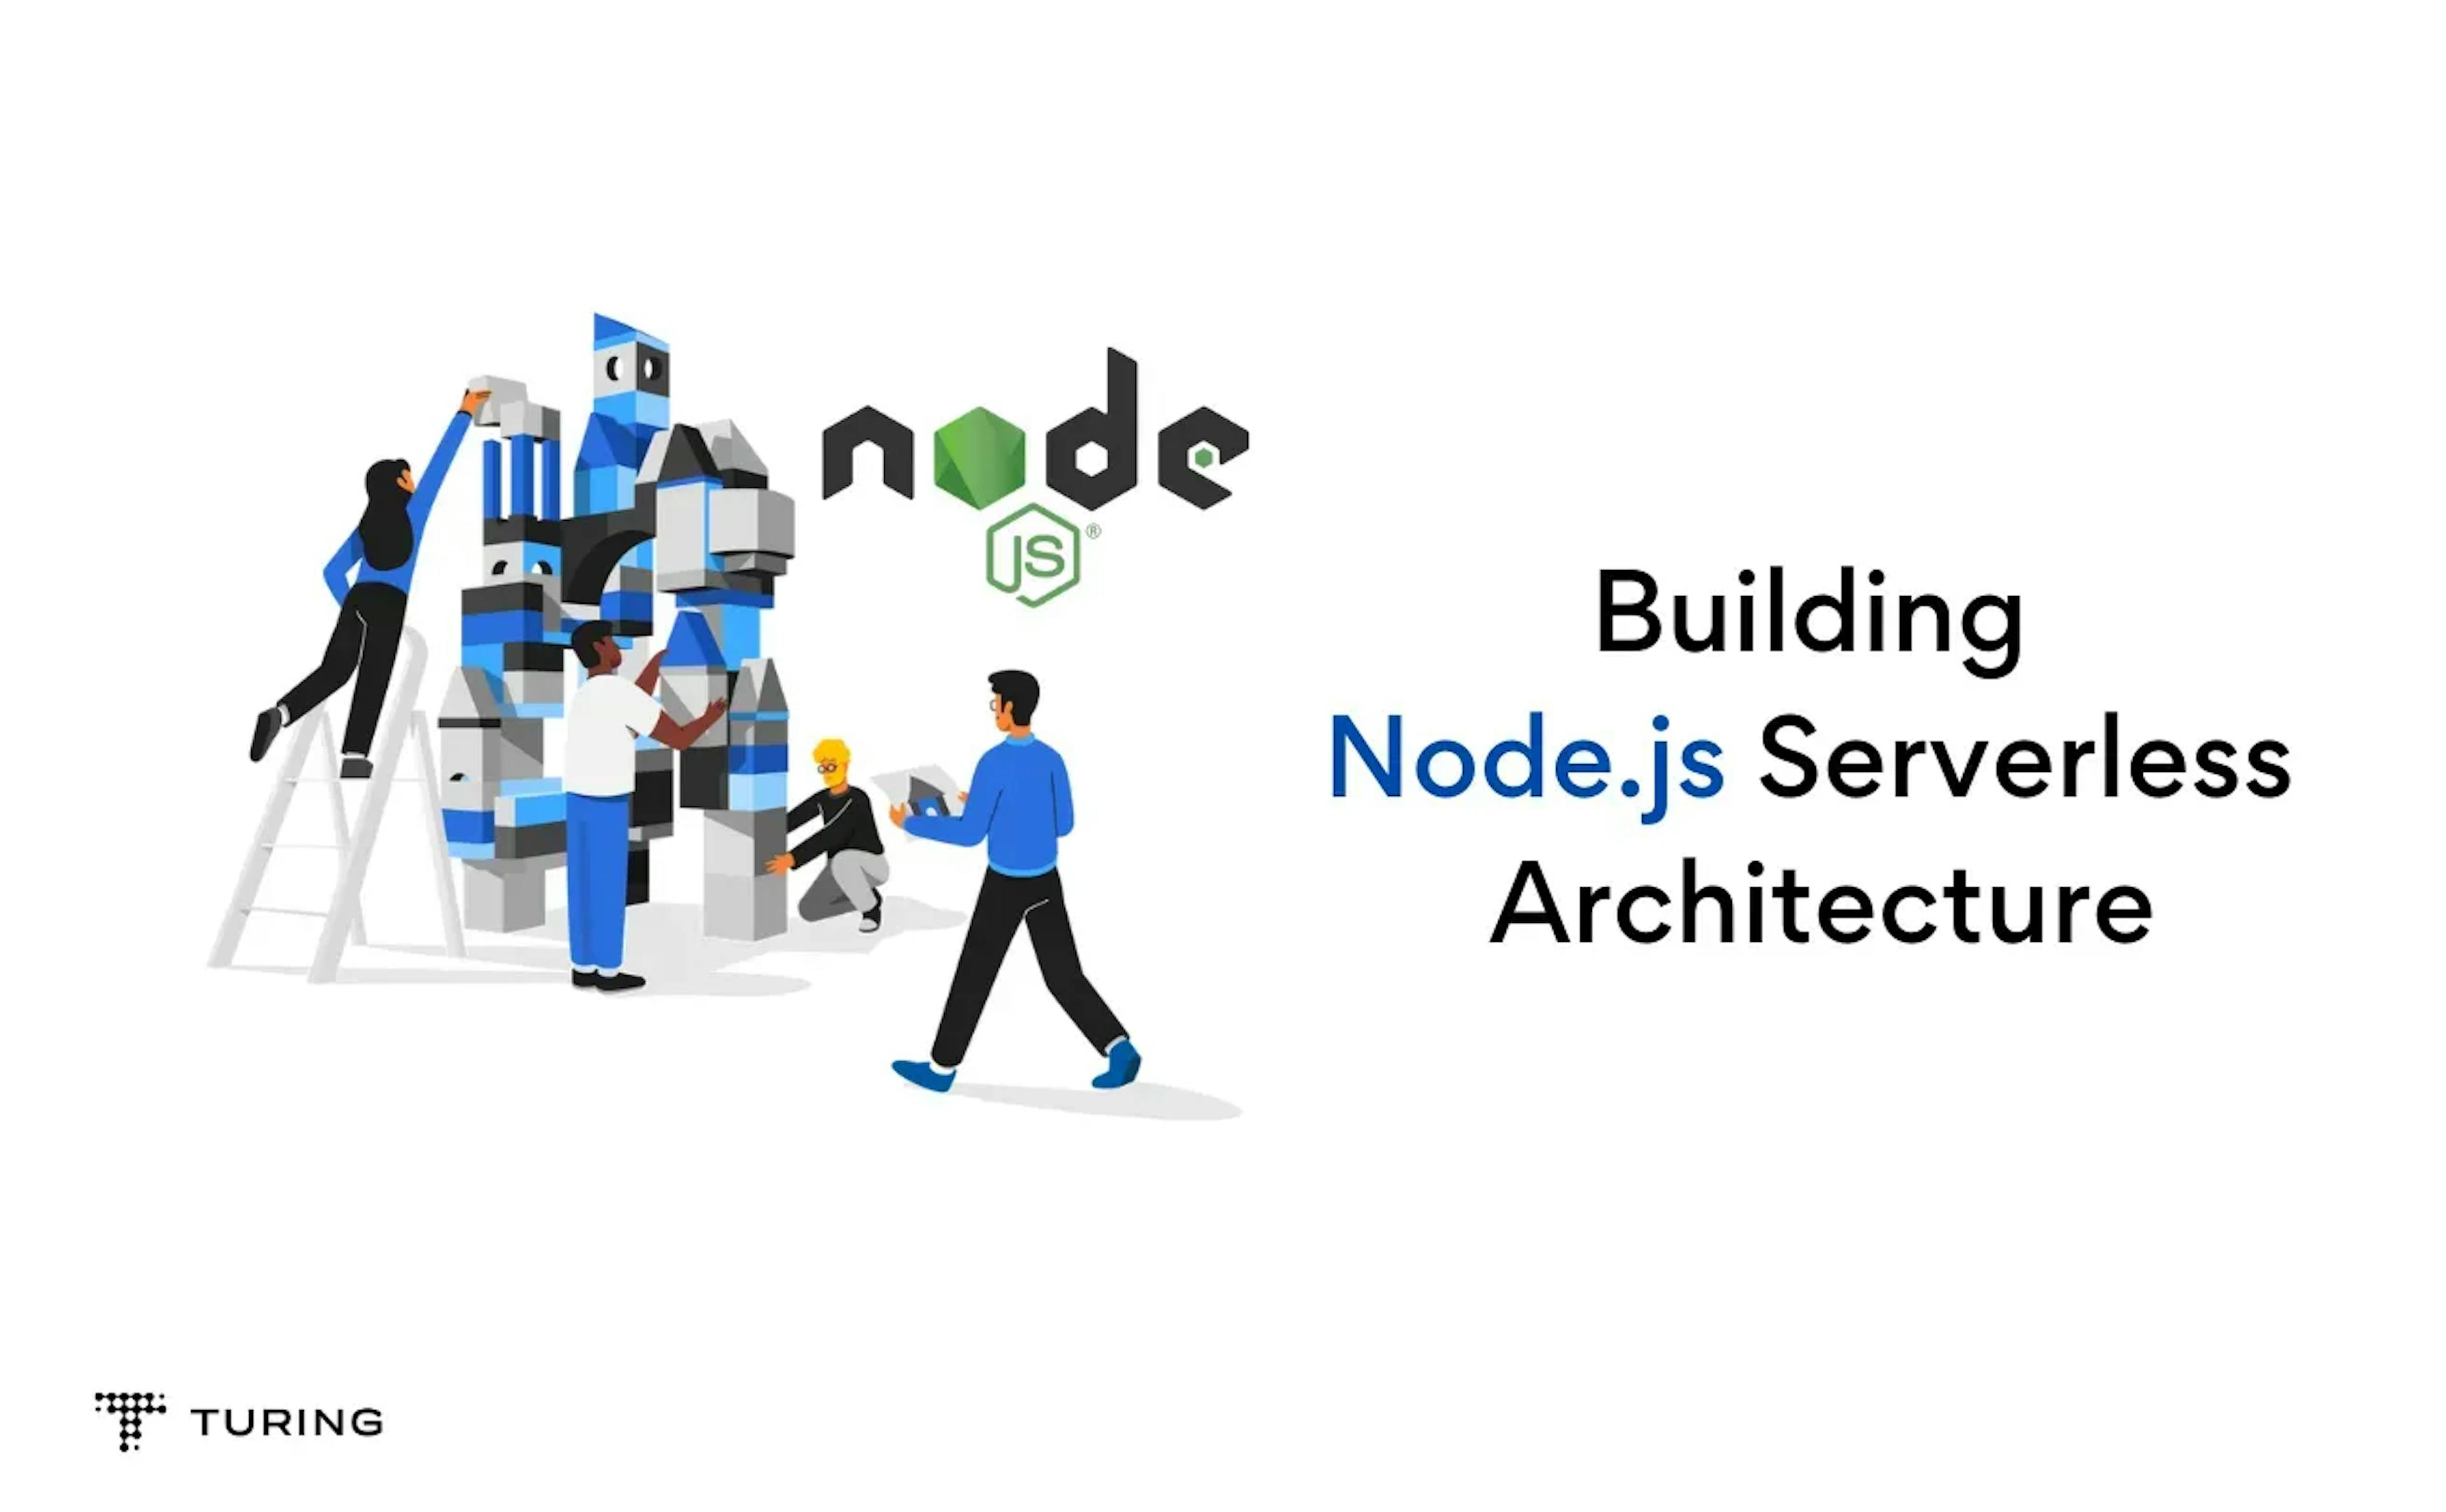 Building Node.js Serverless Architecture